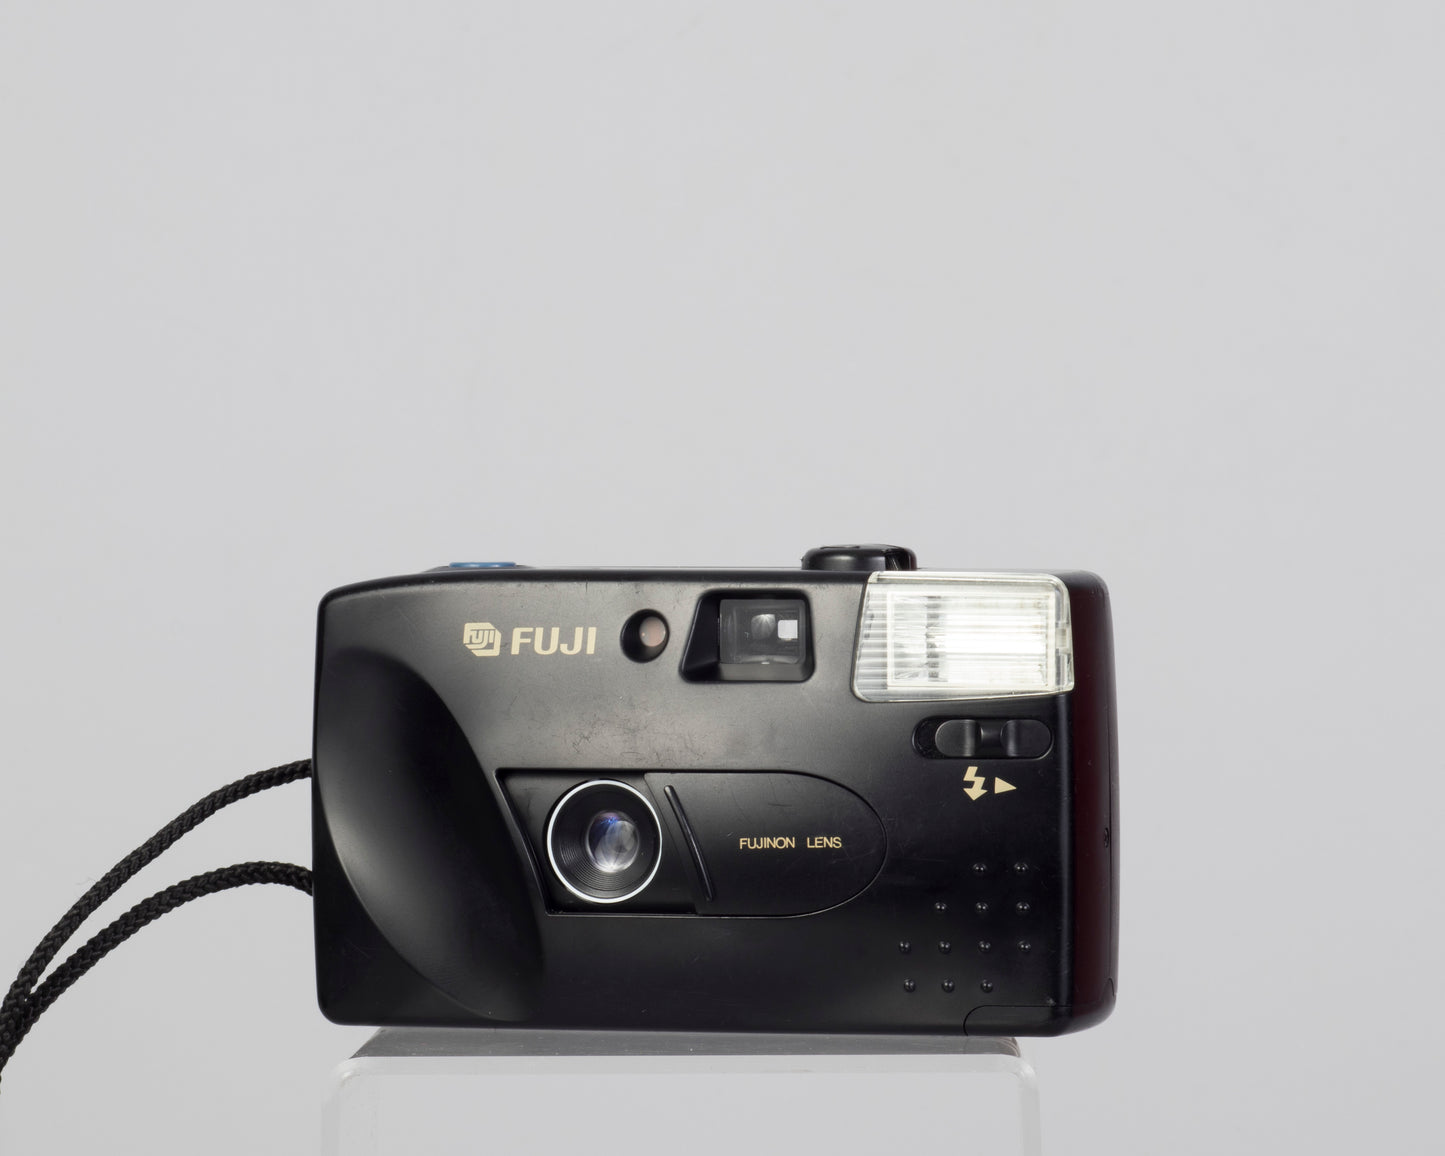 Fuji DL-8 35mm film camera (serial 10402220)